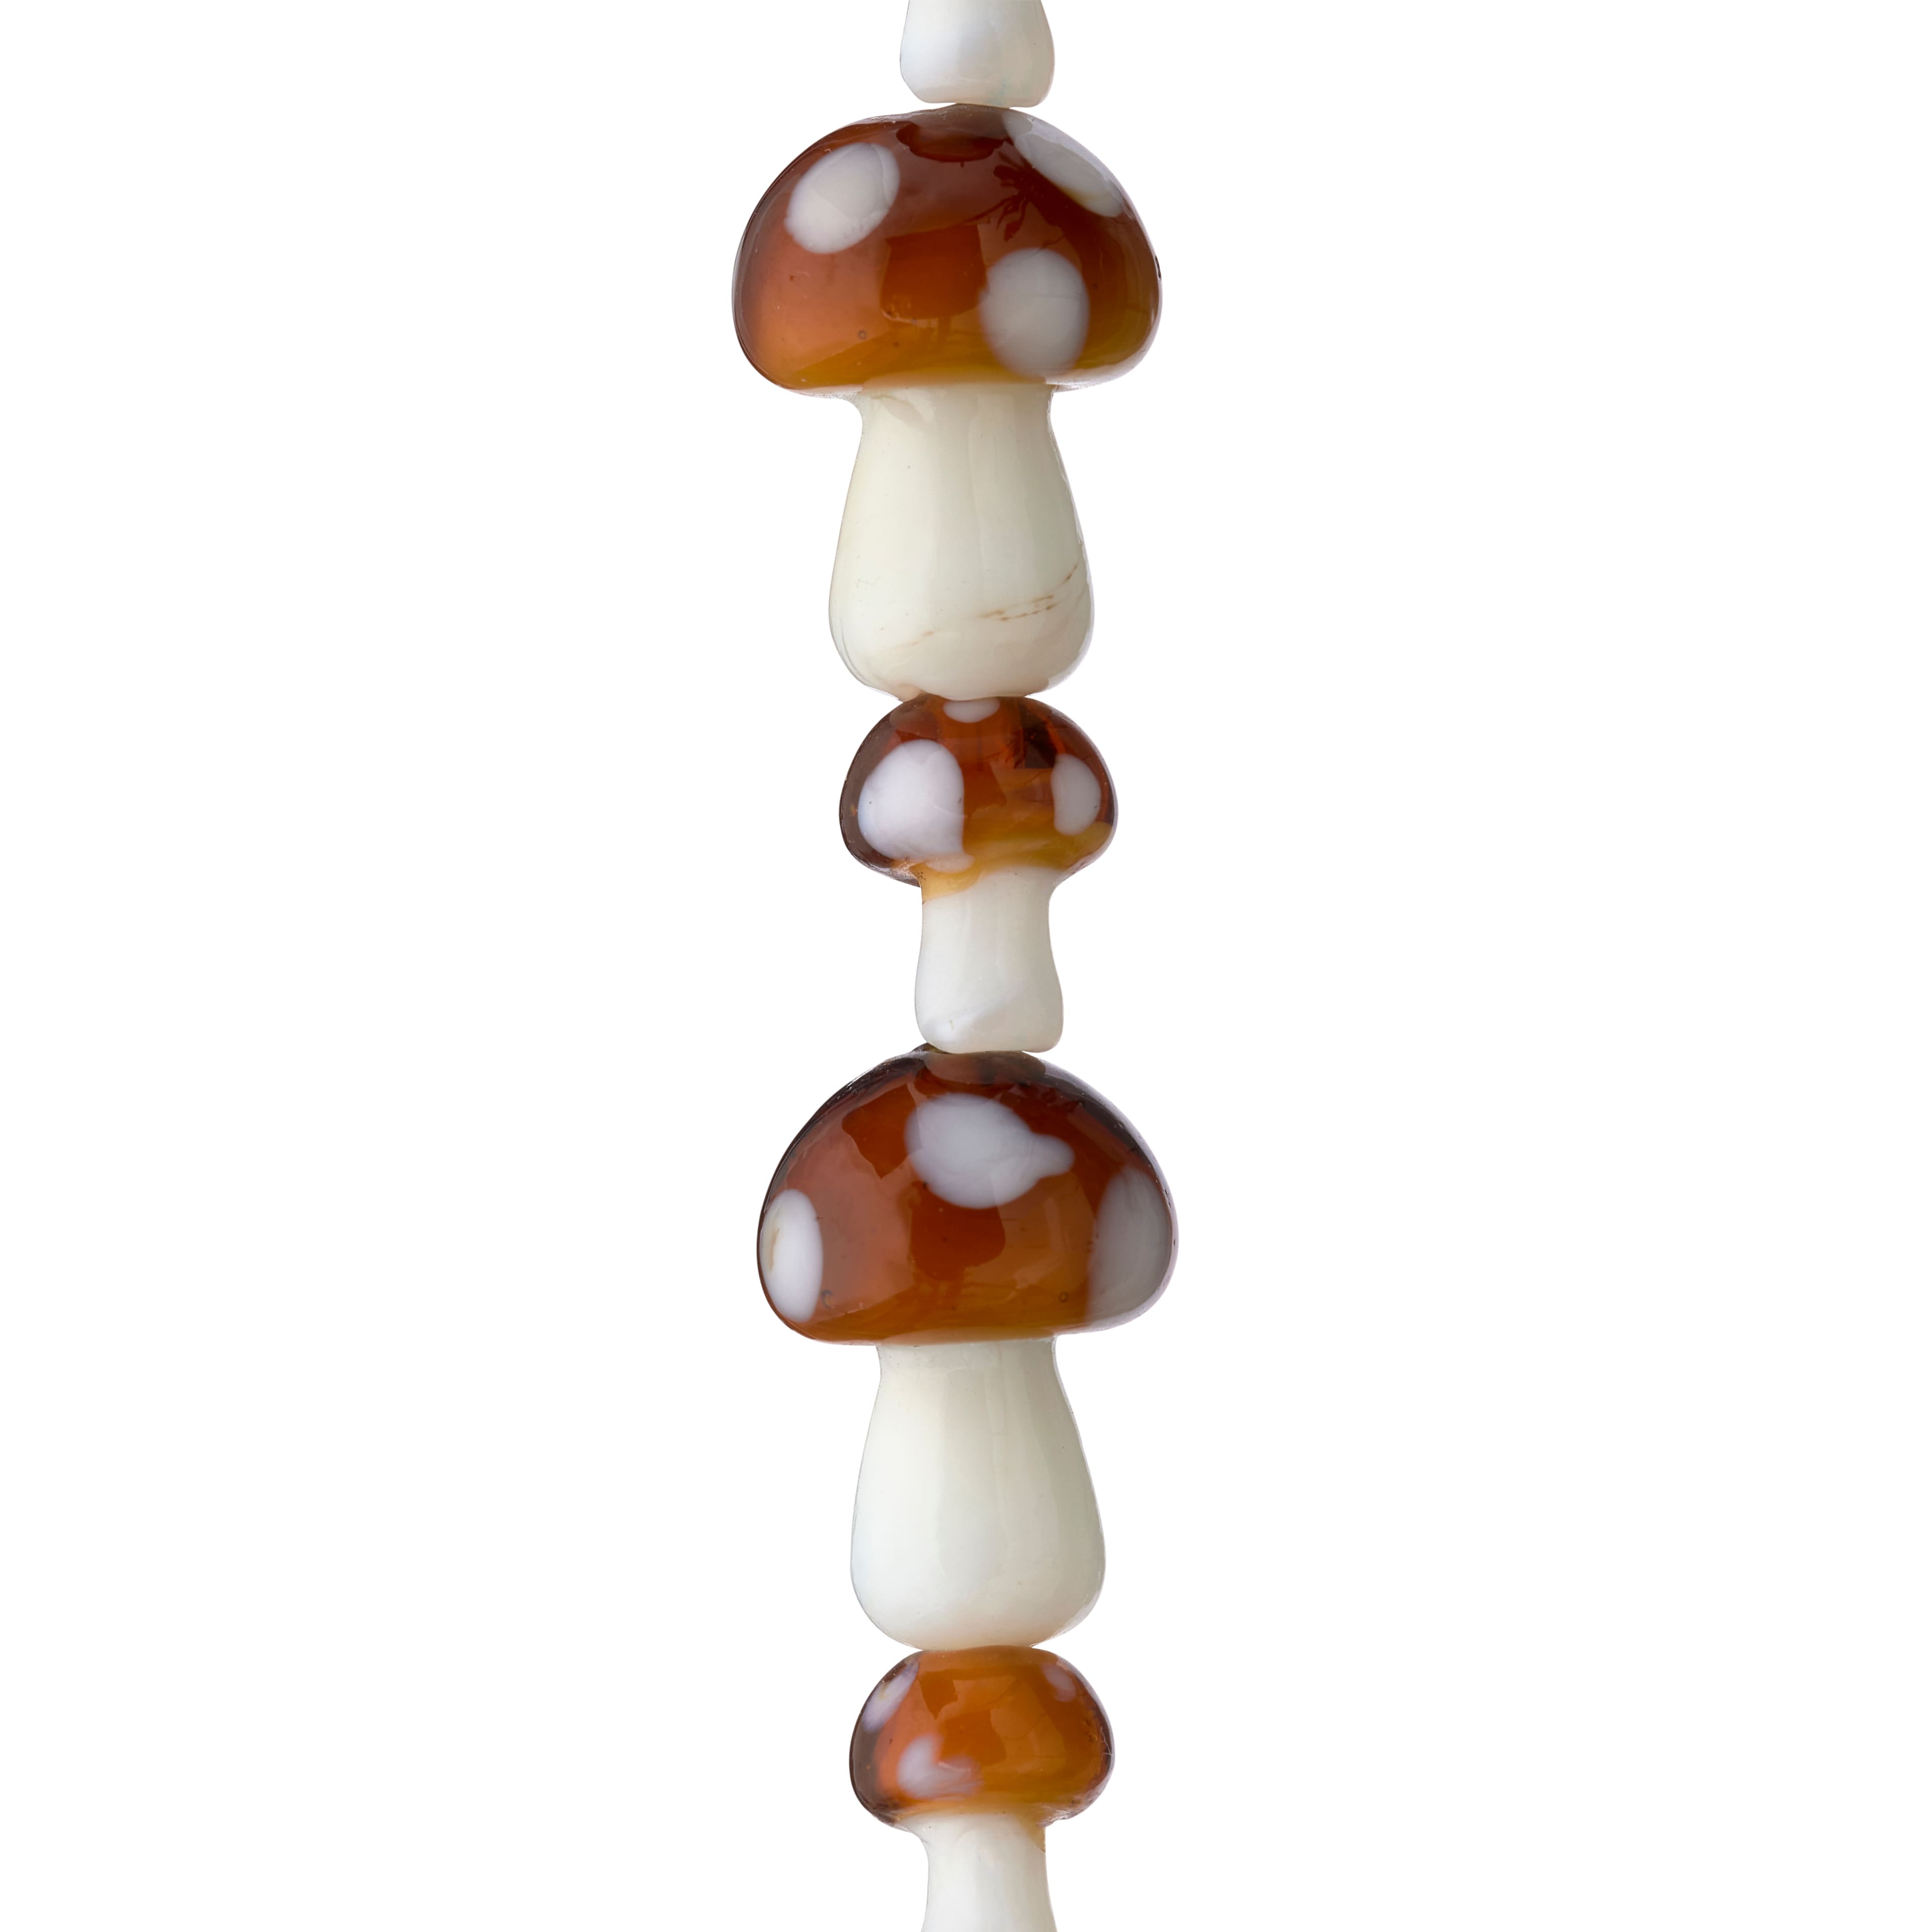 5 - Red Glass Mushroom Beads, Toadstool Beads, Jewelry Charms